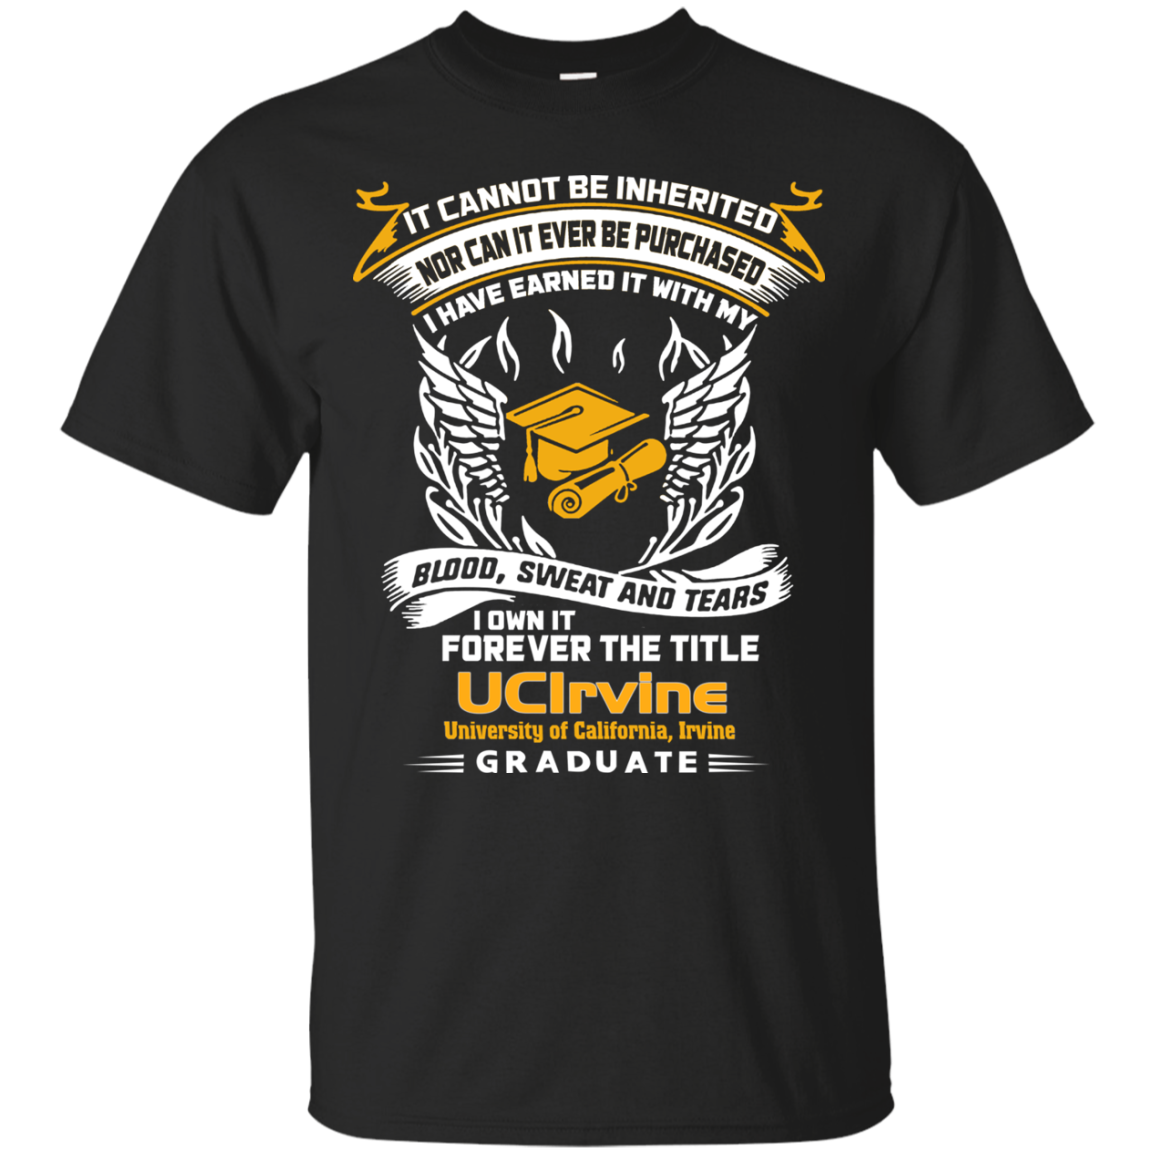 University Of California Irvine Graduate Shirts I Own It Forever The ...